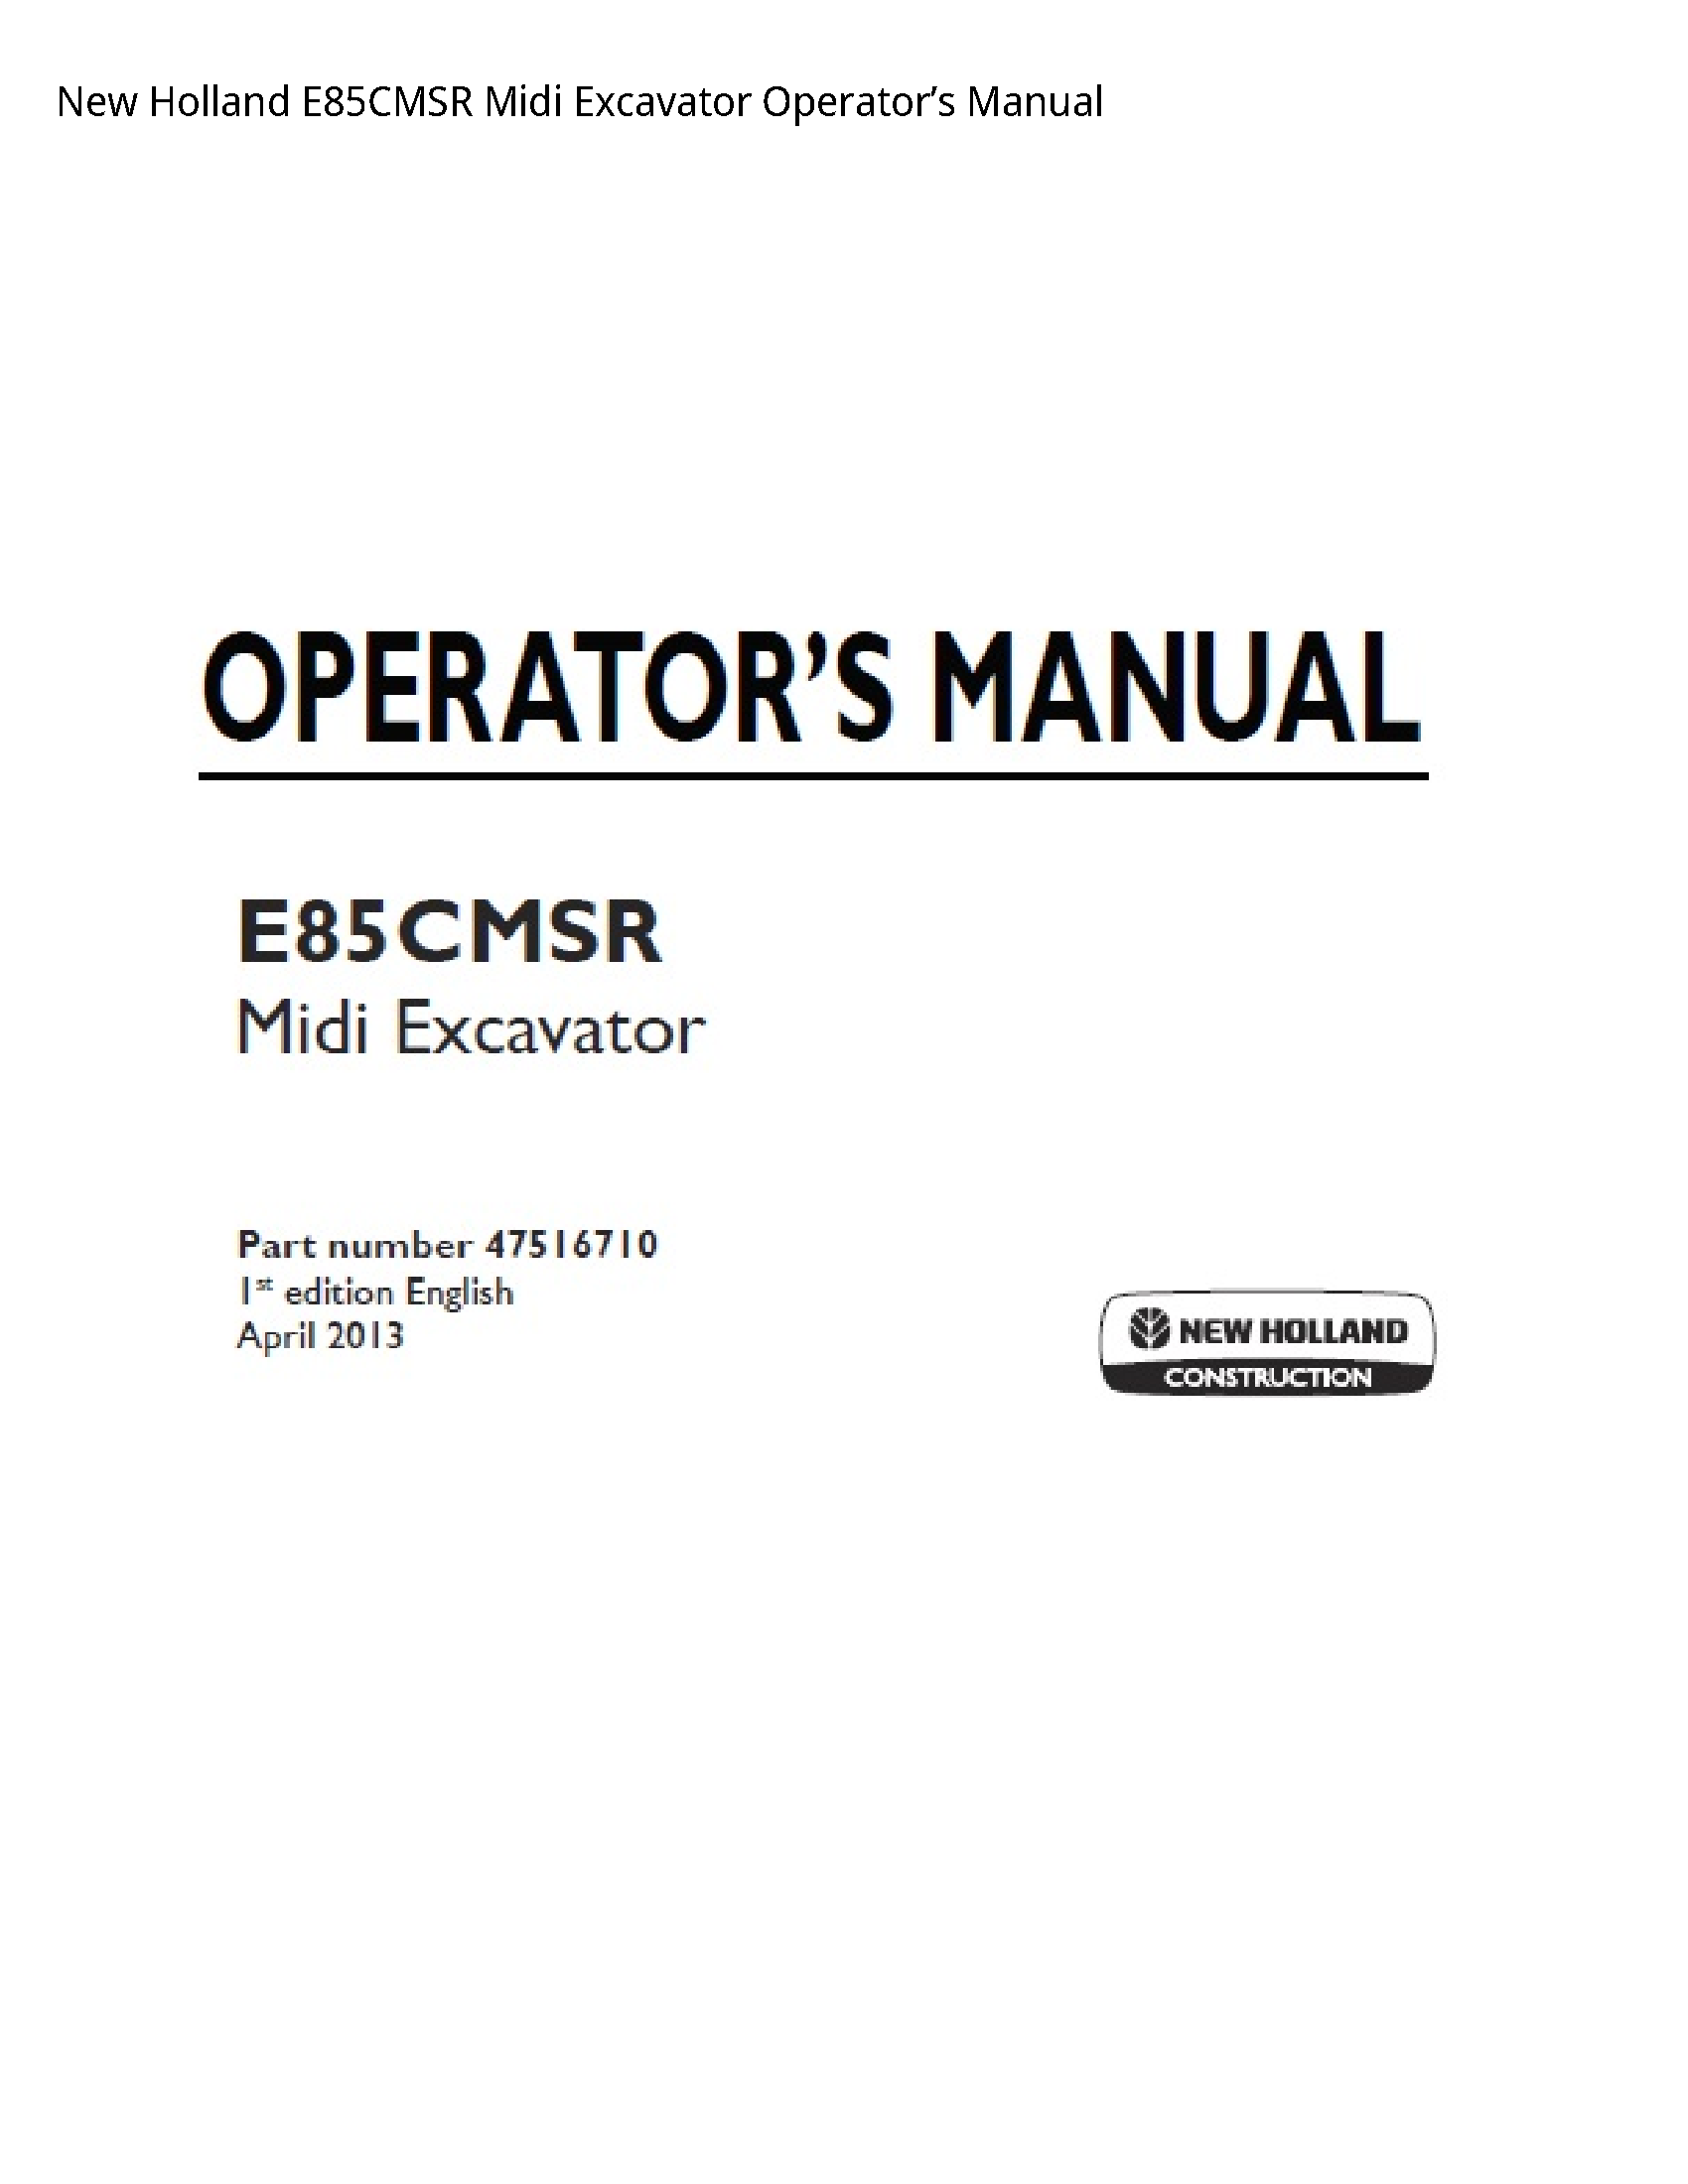 New Holland E85CMSR Midi Excavator Operator’s manual